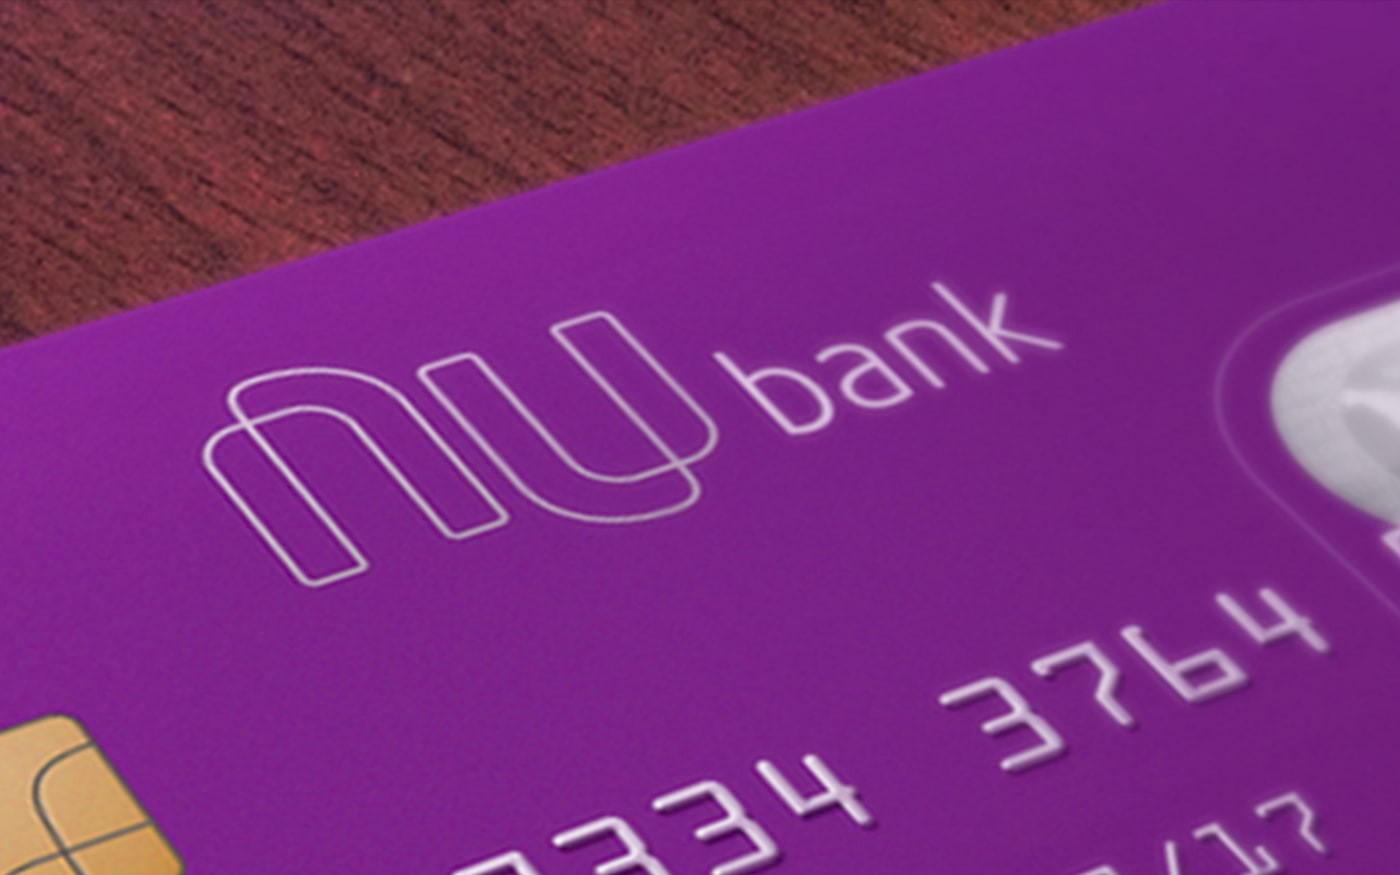 Nubank customer loses R $ 12,000 in scam